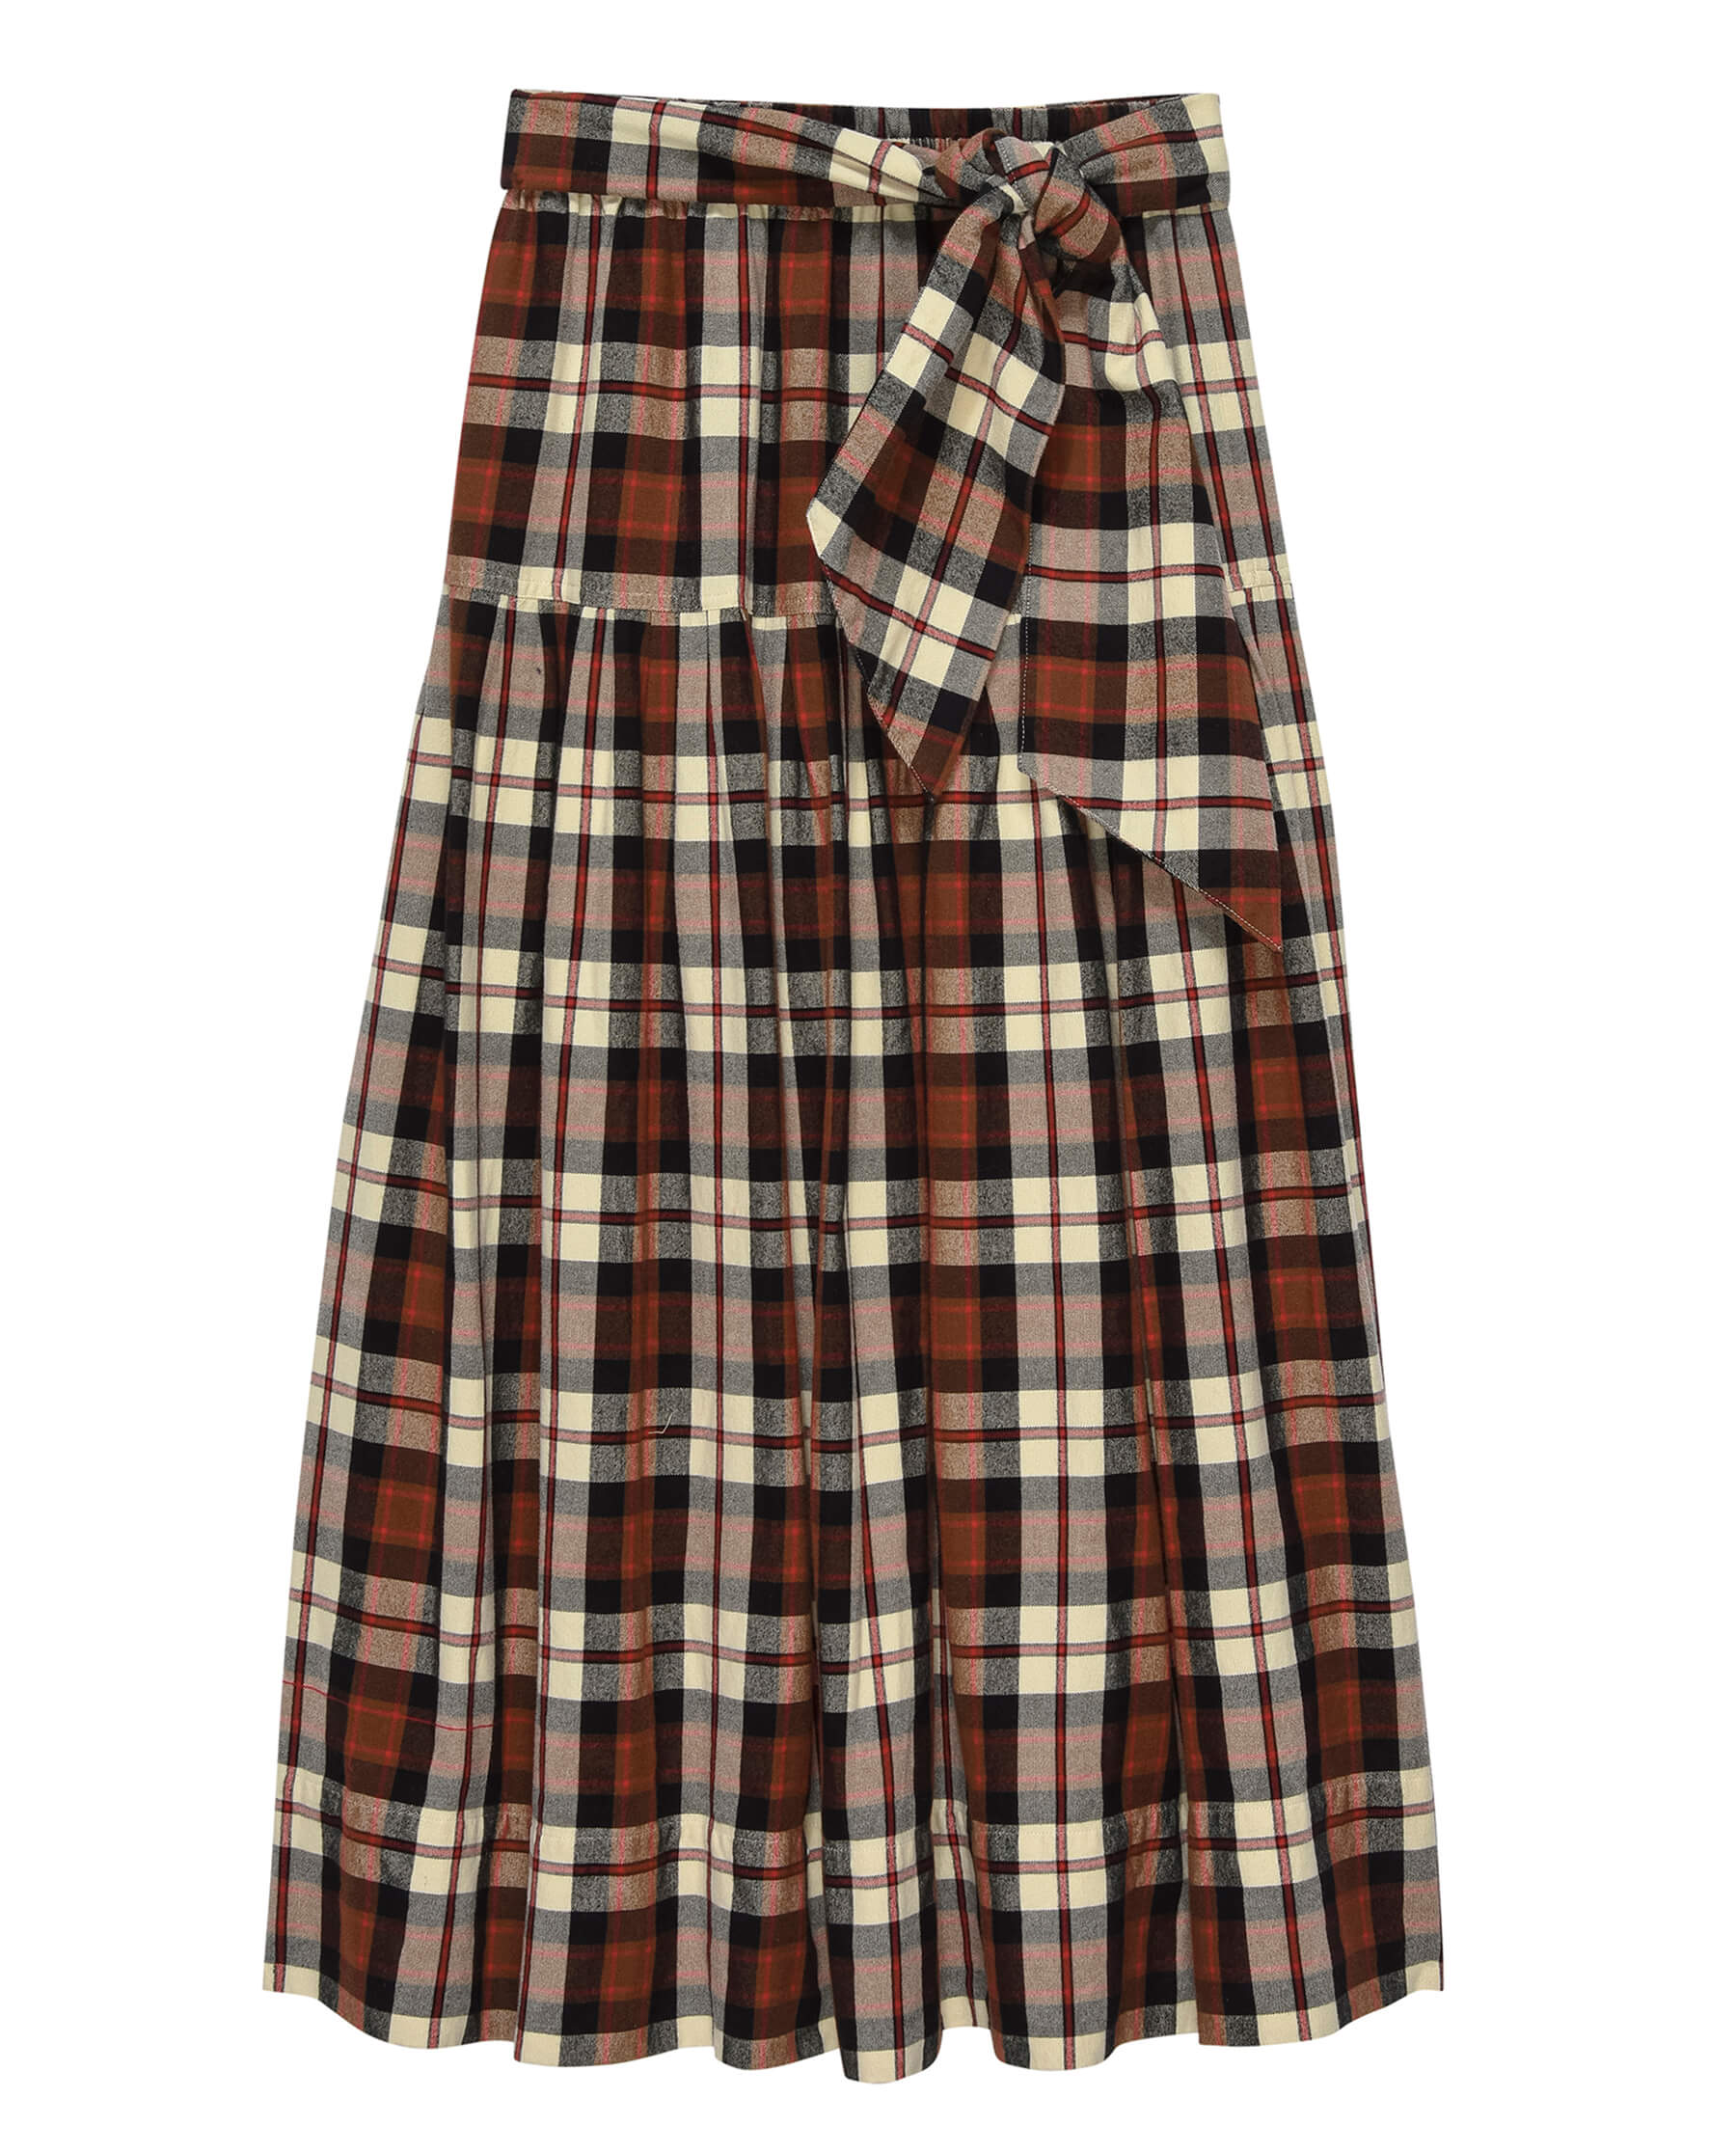 The Highland Skirt. -- Mill Plaid